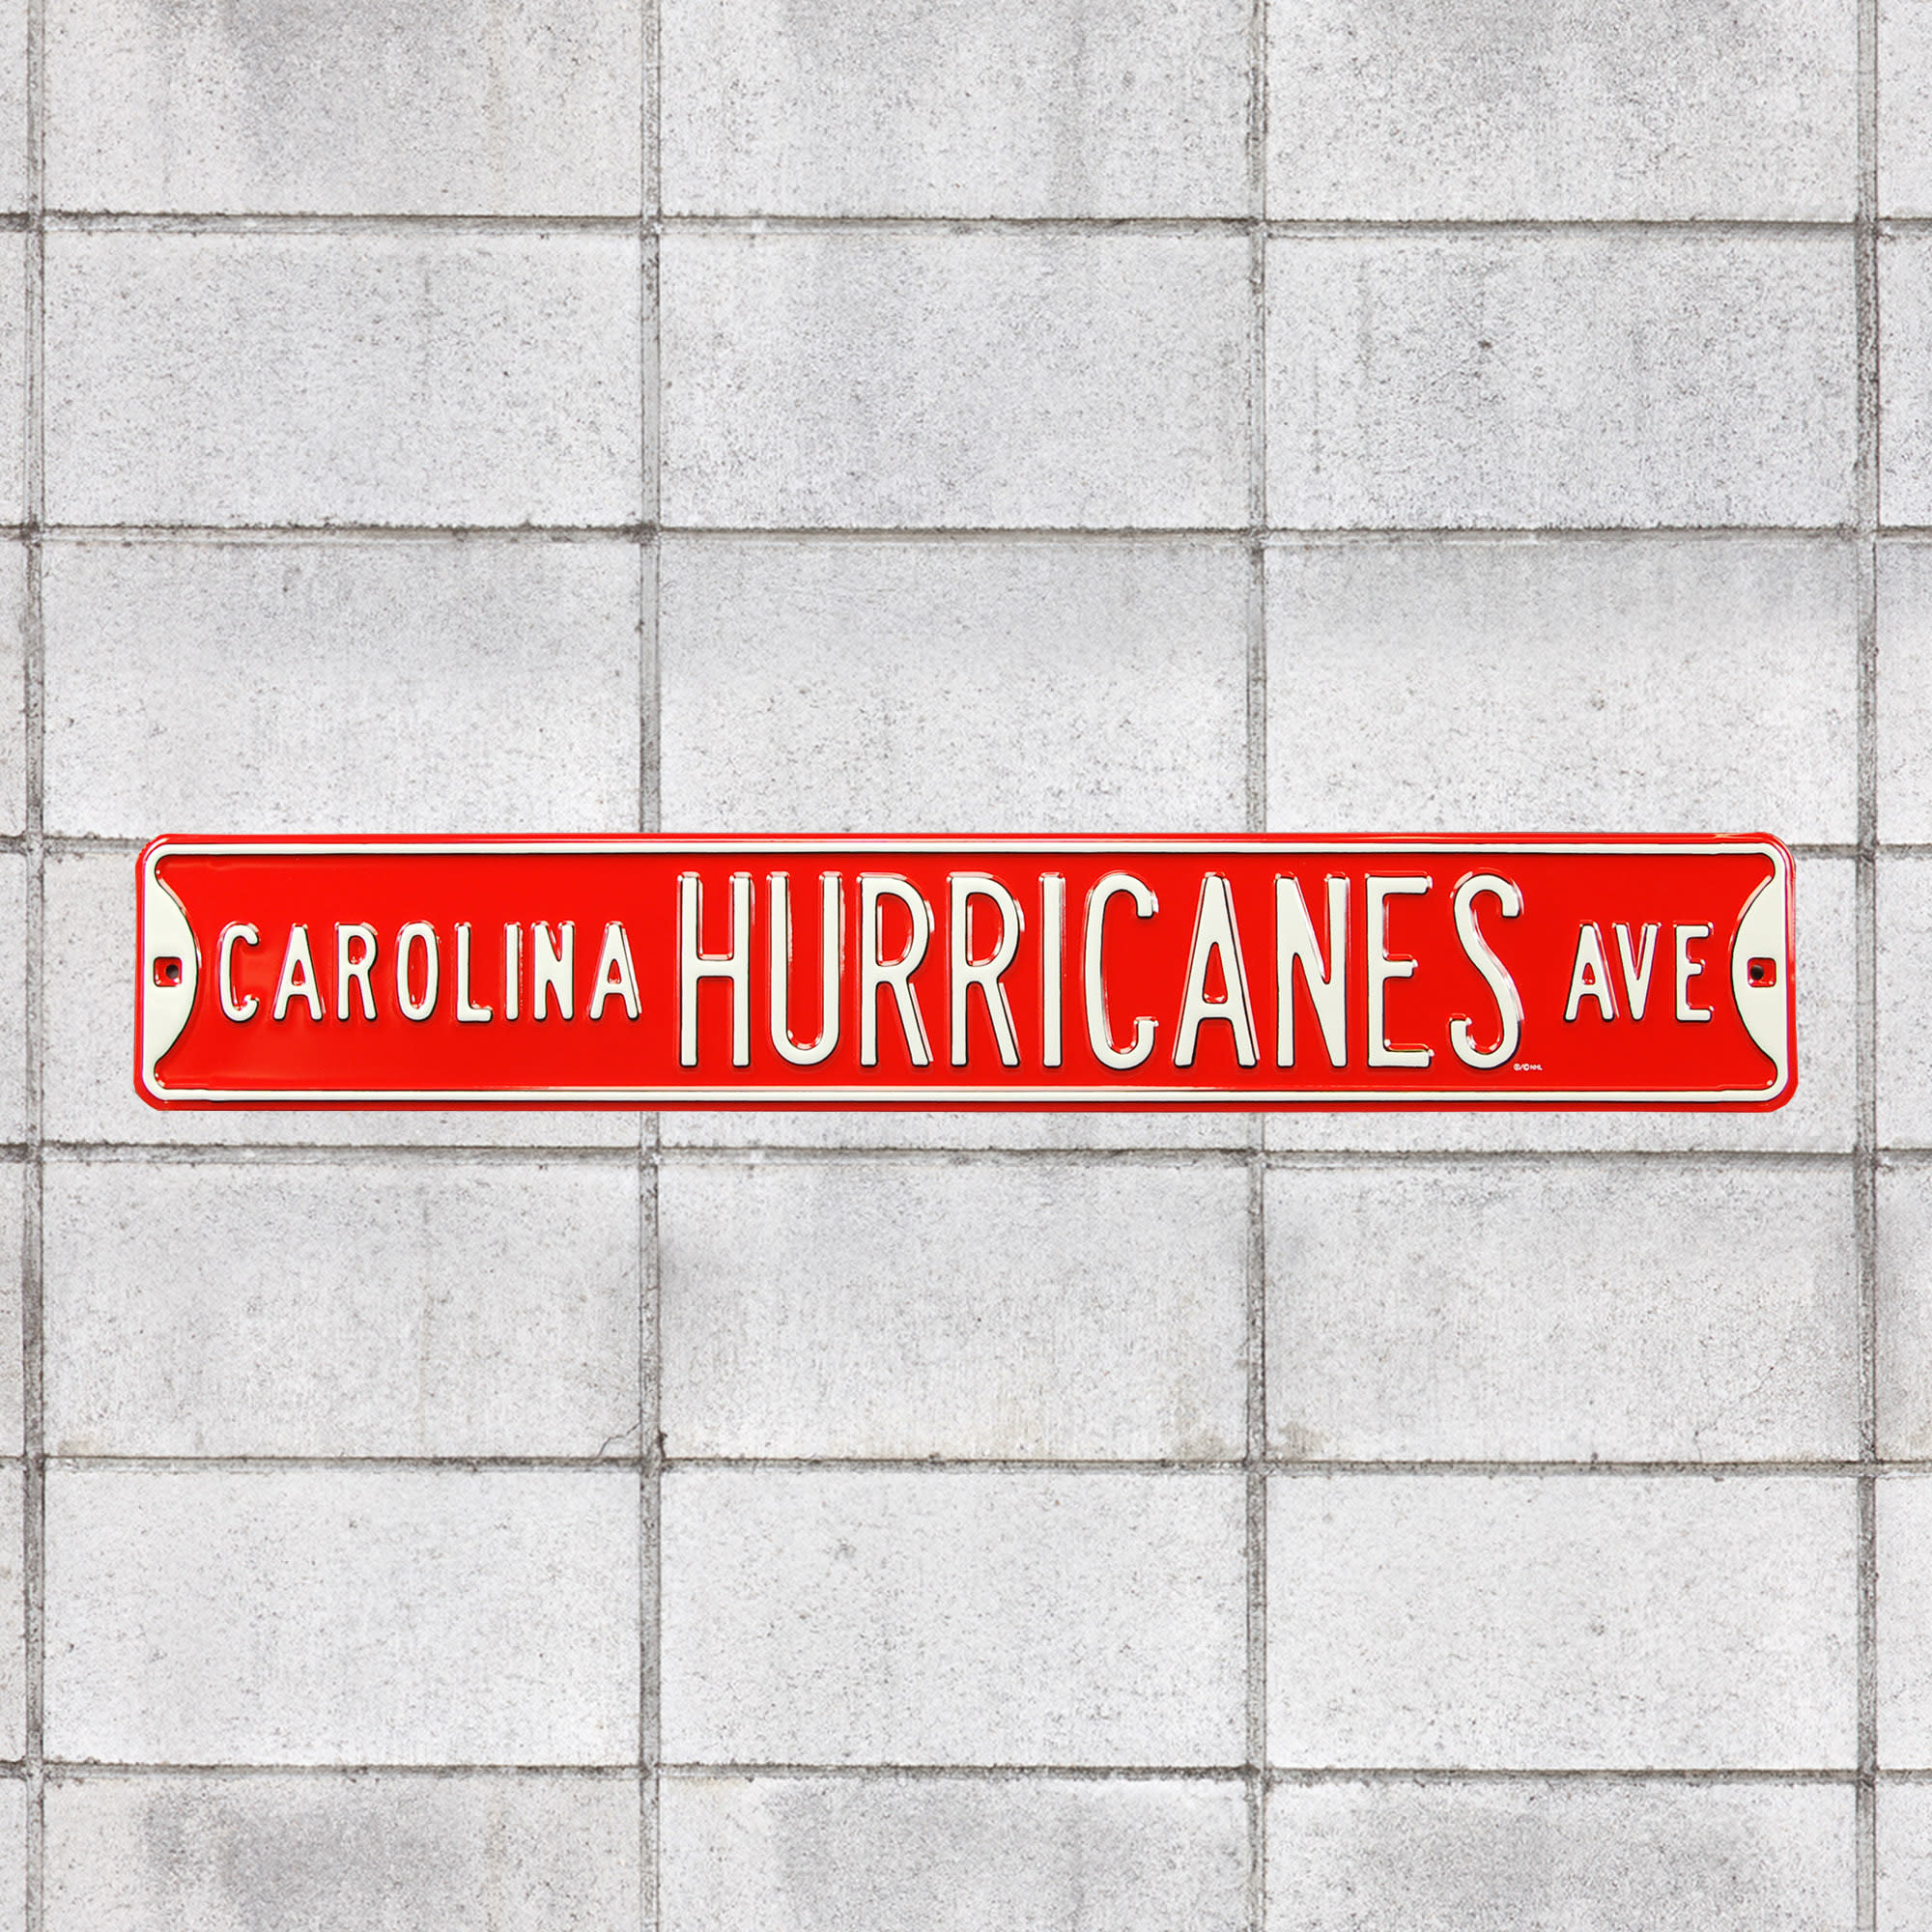 Carolina Hurricanes: Carolina Hurricanes Avenue - Officially Licensed NHL Metal Street Sign 36.0"W x 6.0"H by Fathead | 100% Ste